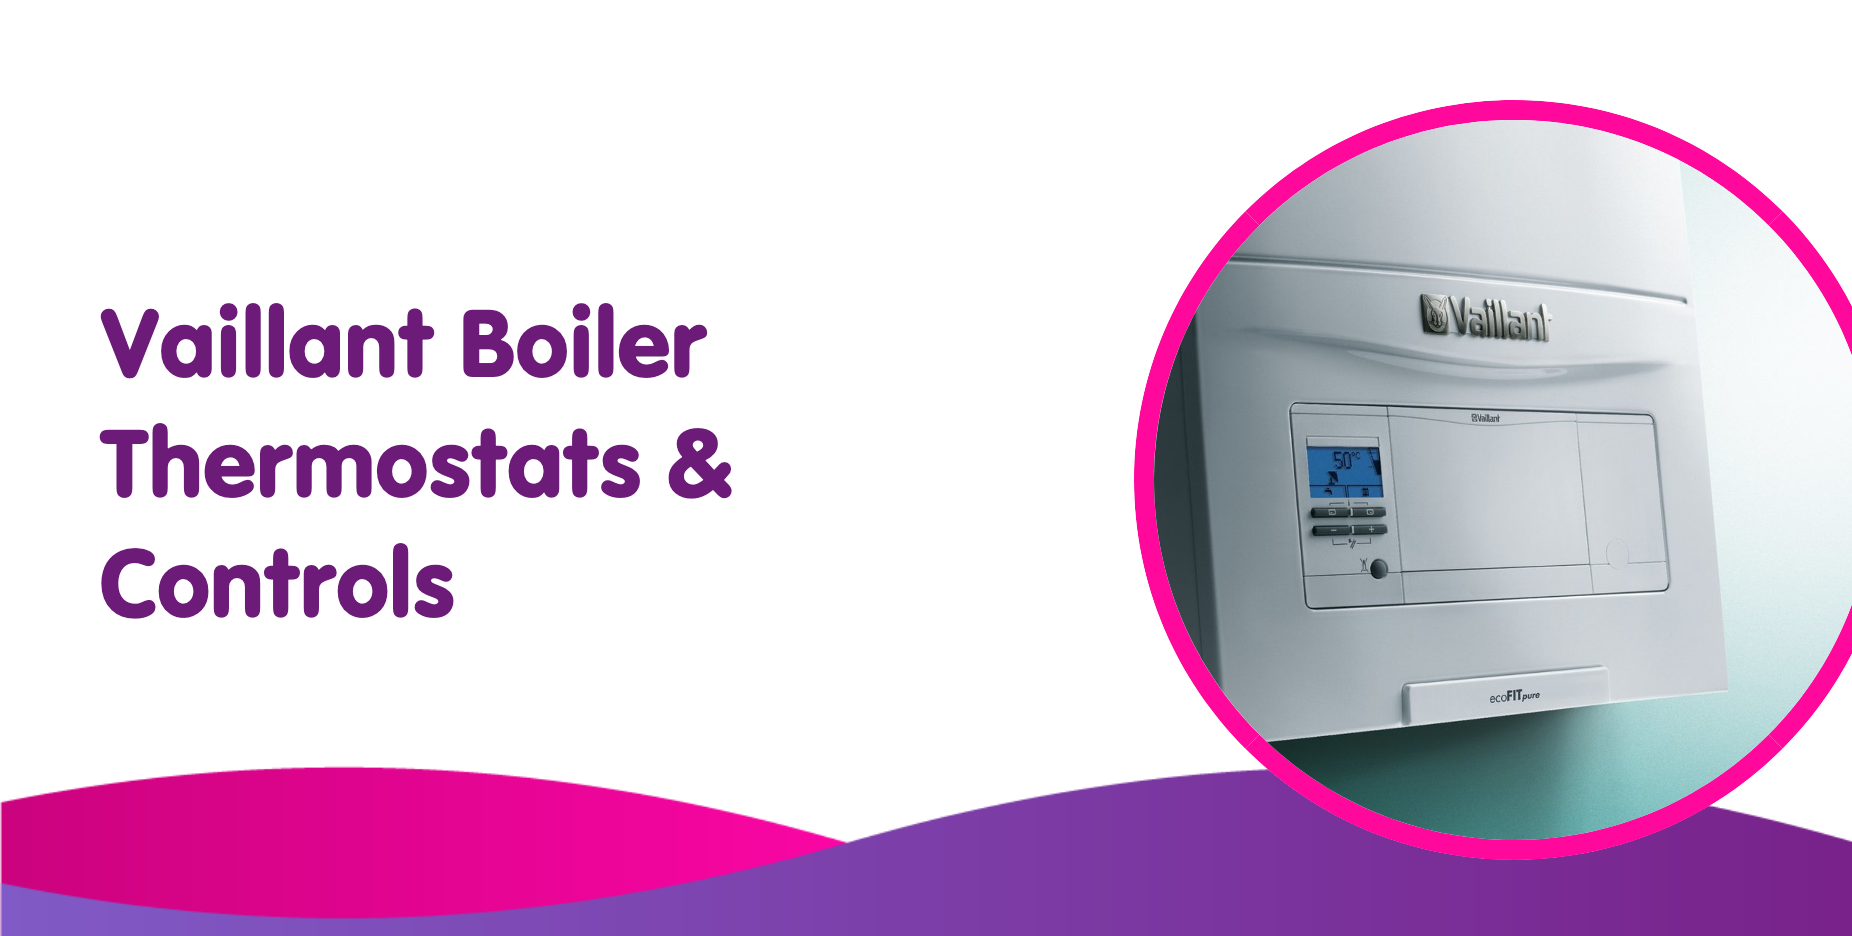 Vaillant Boiler Thermostats & Controls